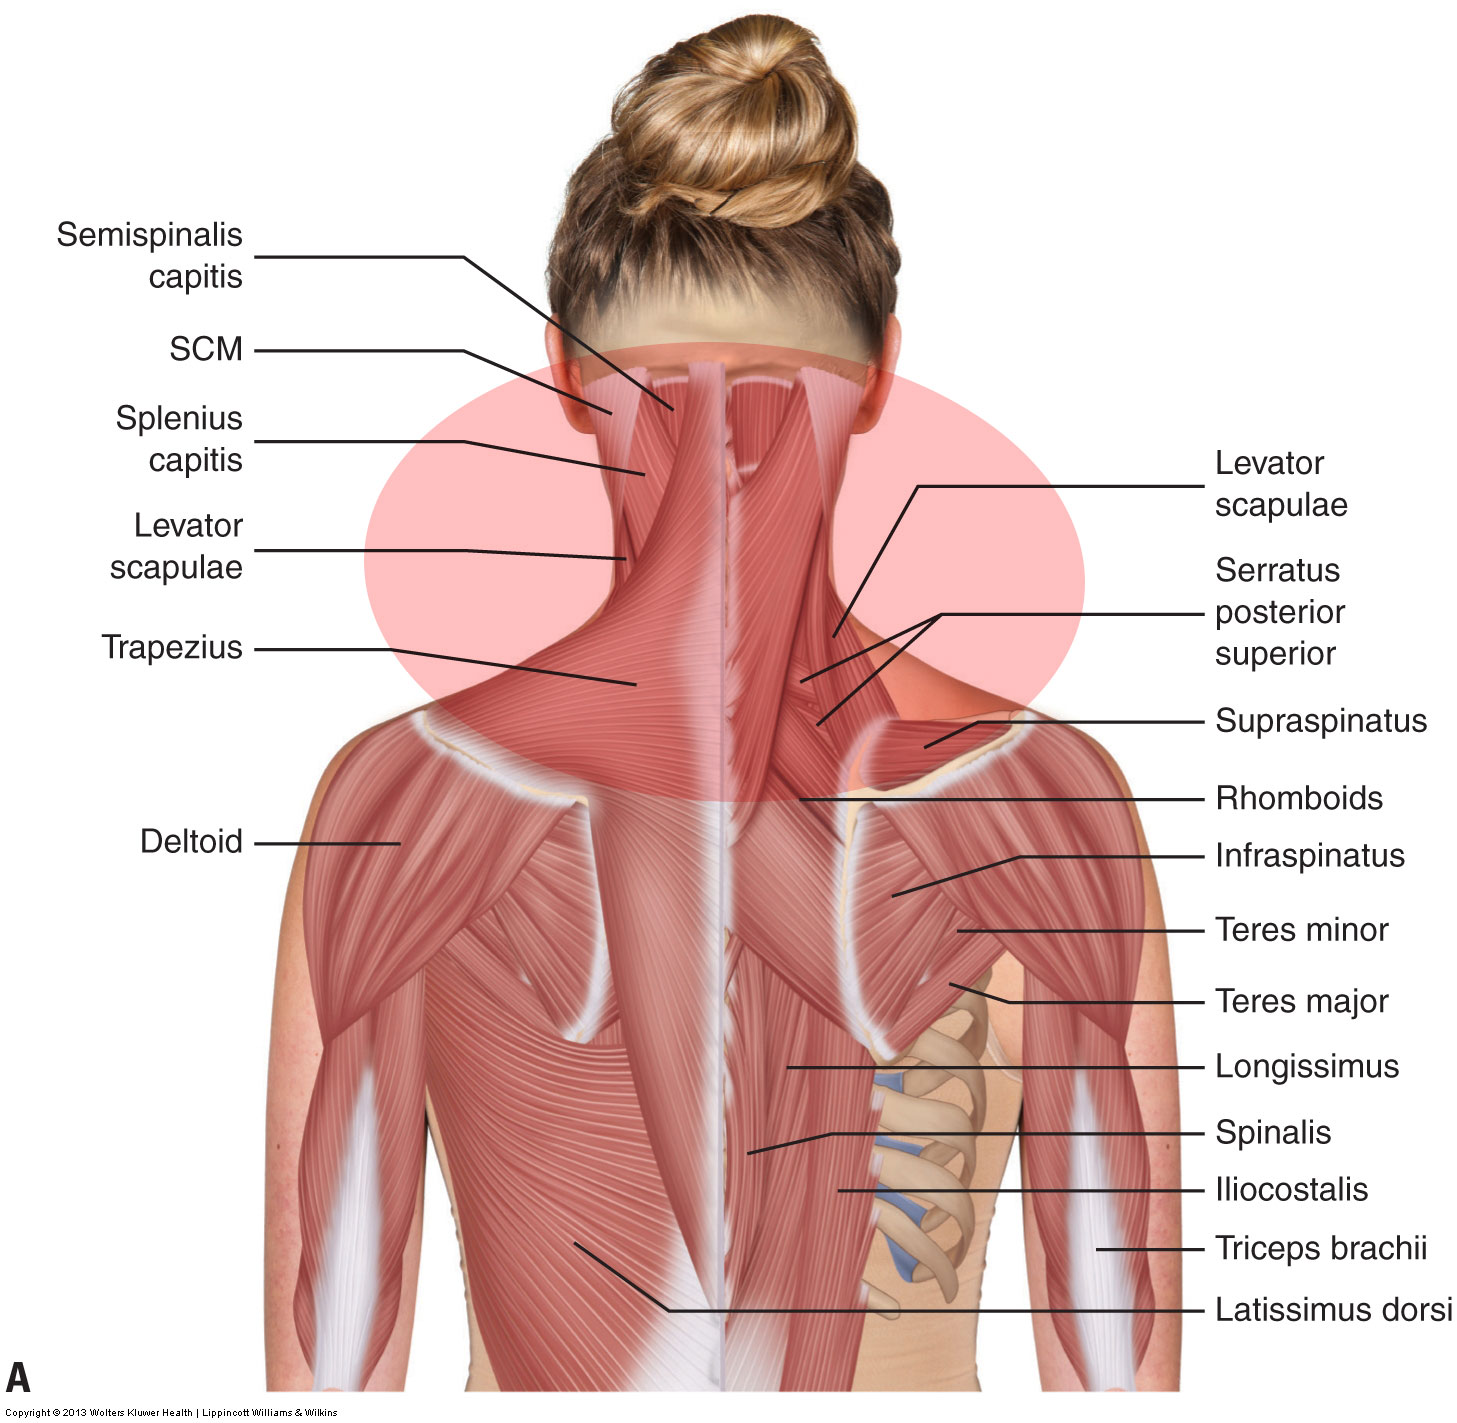 Posterior view of the muscles of the neck. Permission: Joseph E. Muscolino. Advanced Treatment Techniques for the Manual Therapist: Neck (2013).